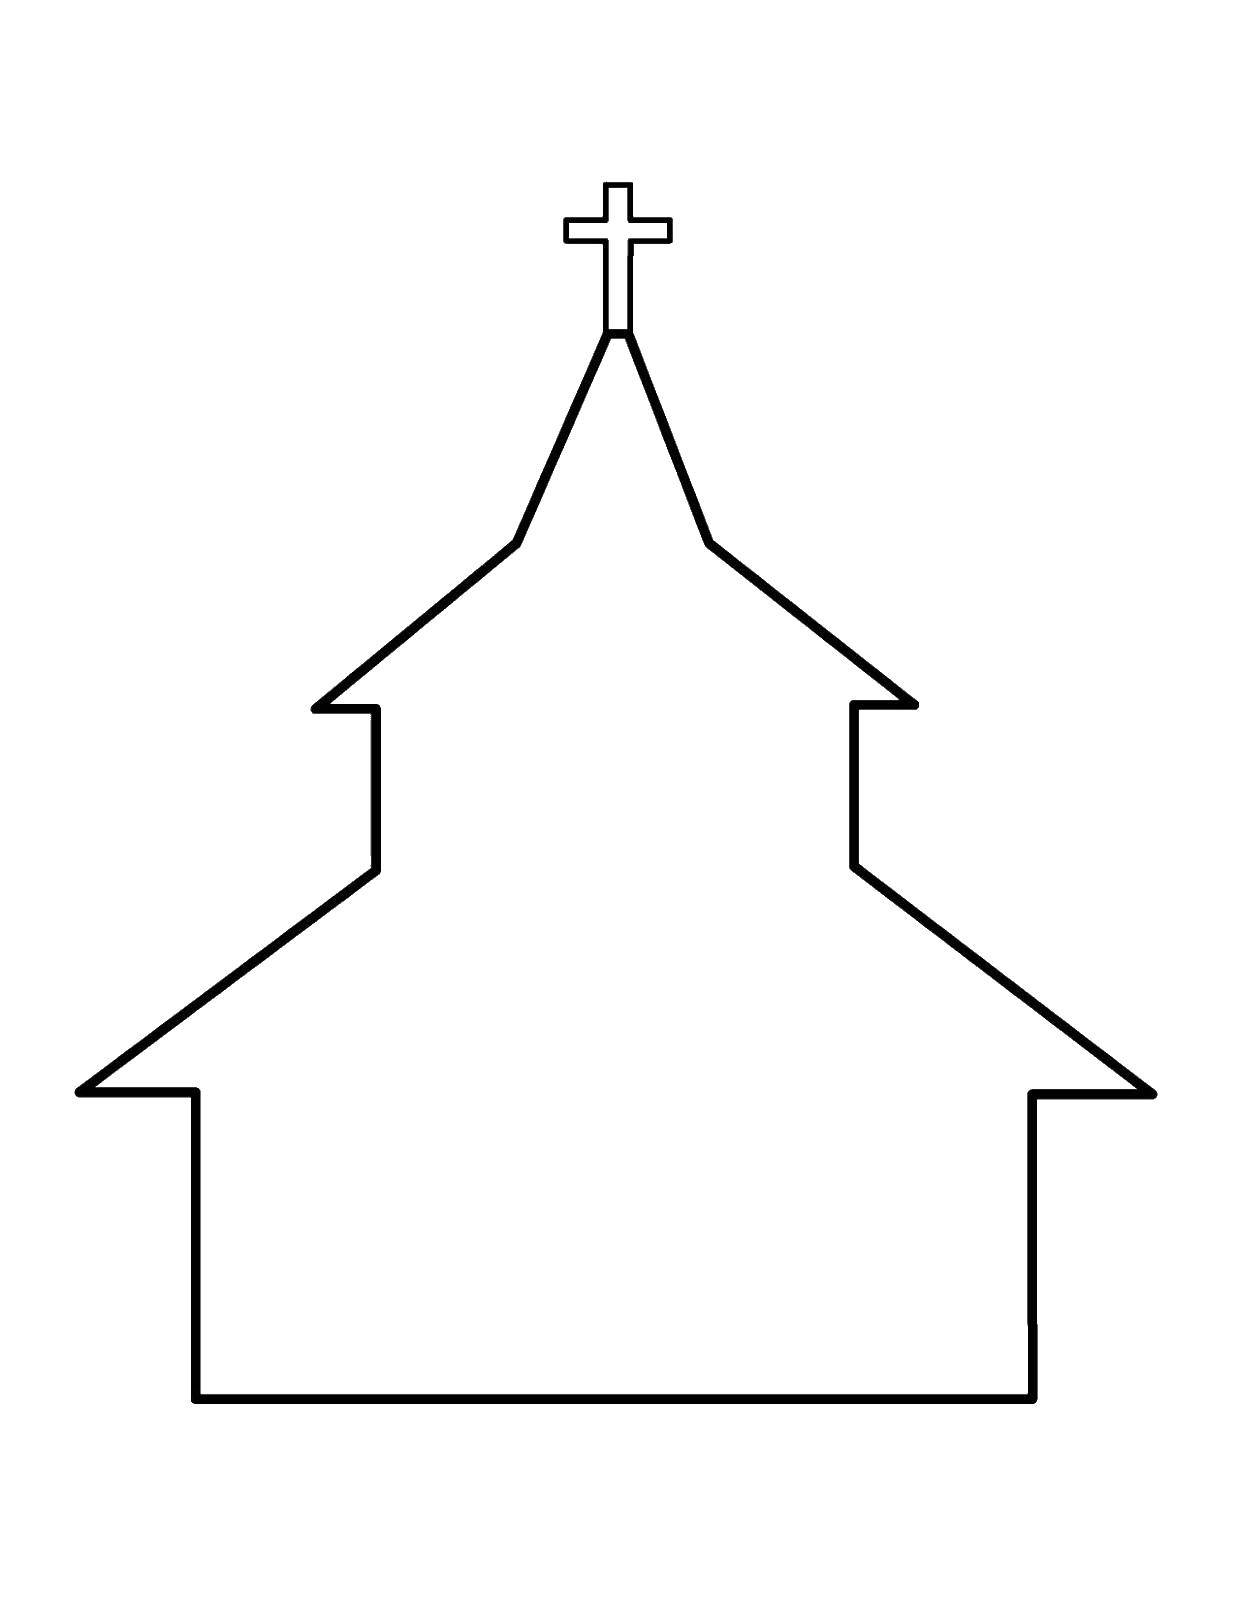 Название: Раскраска Контур церкви. Категория: Контур дома. Теги: церковь, дом.